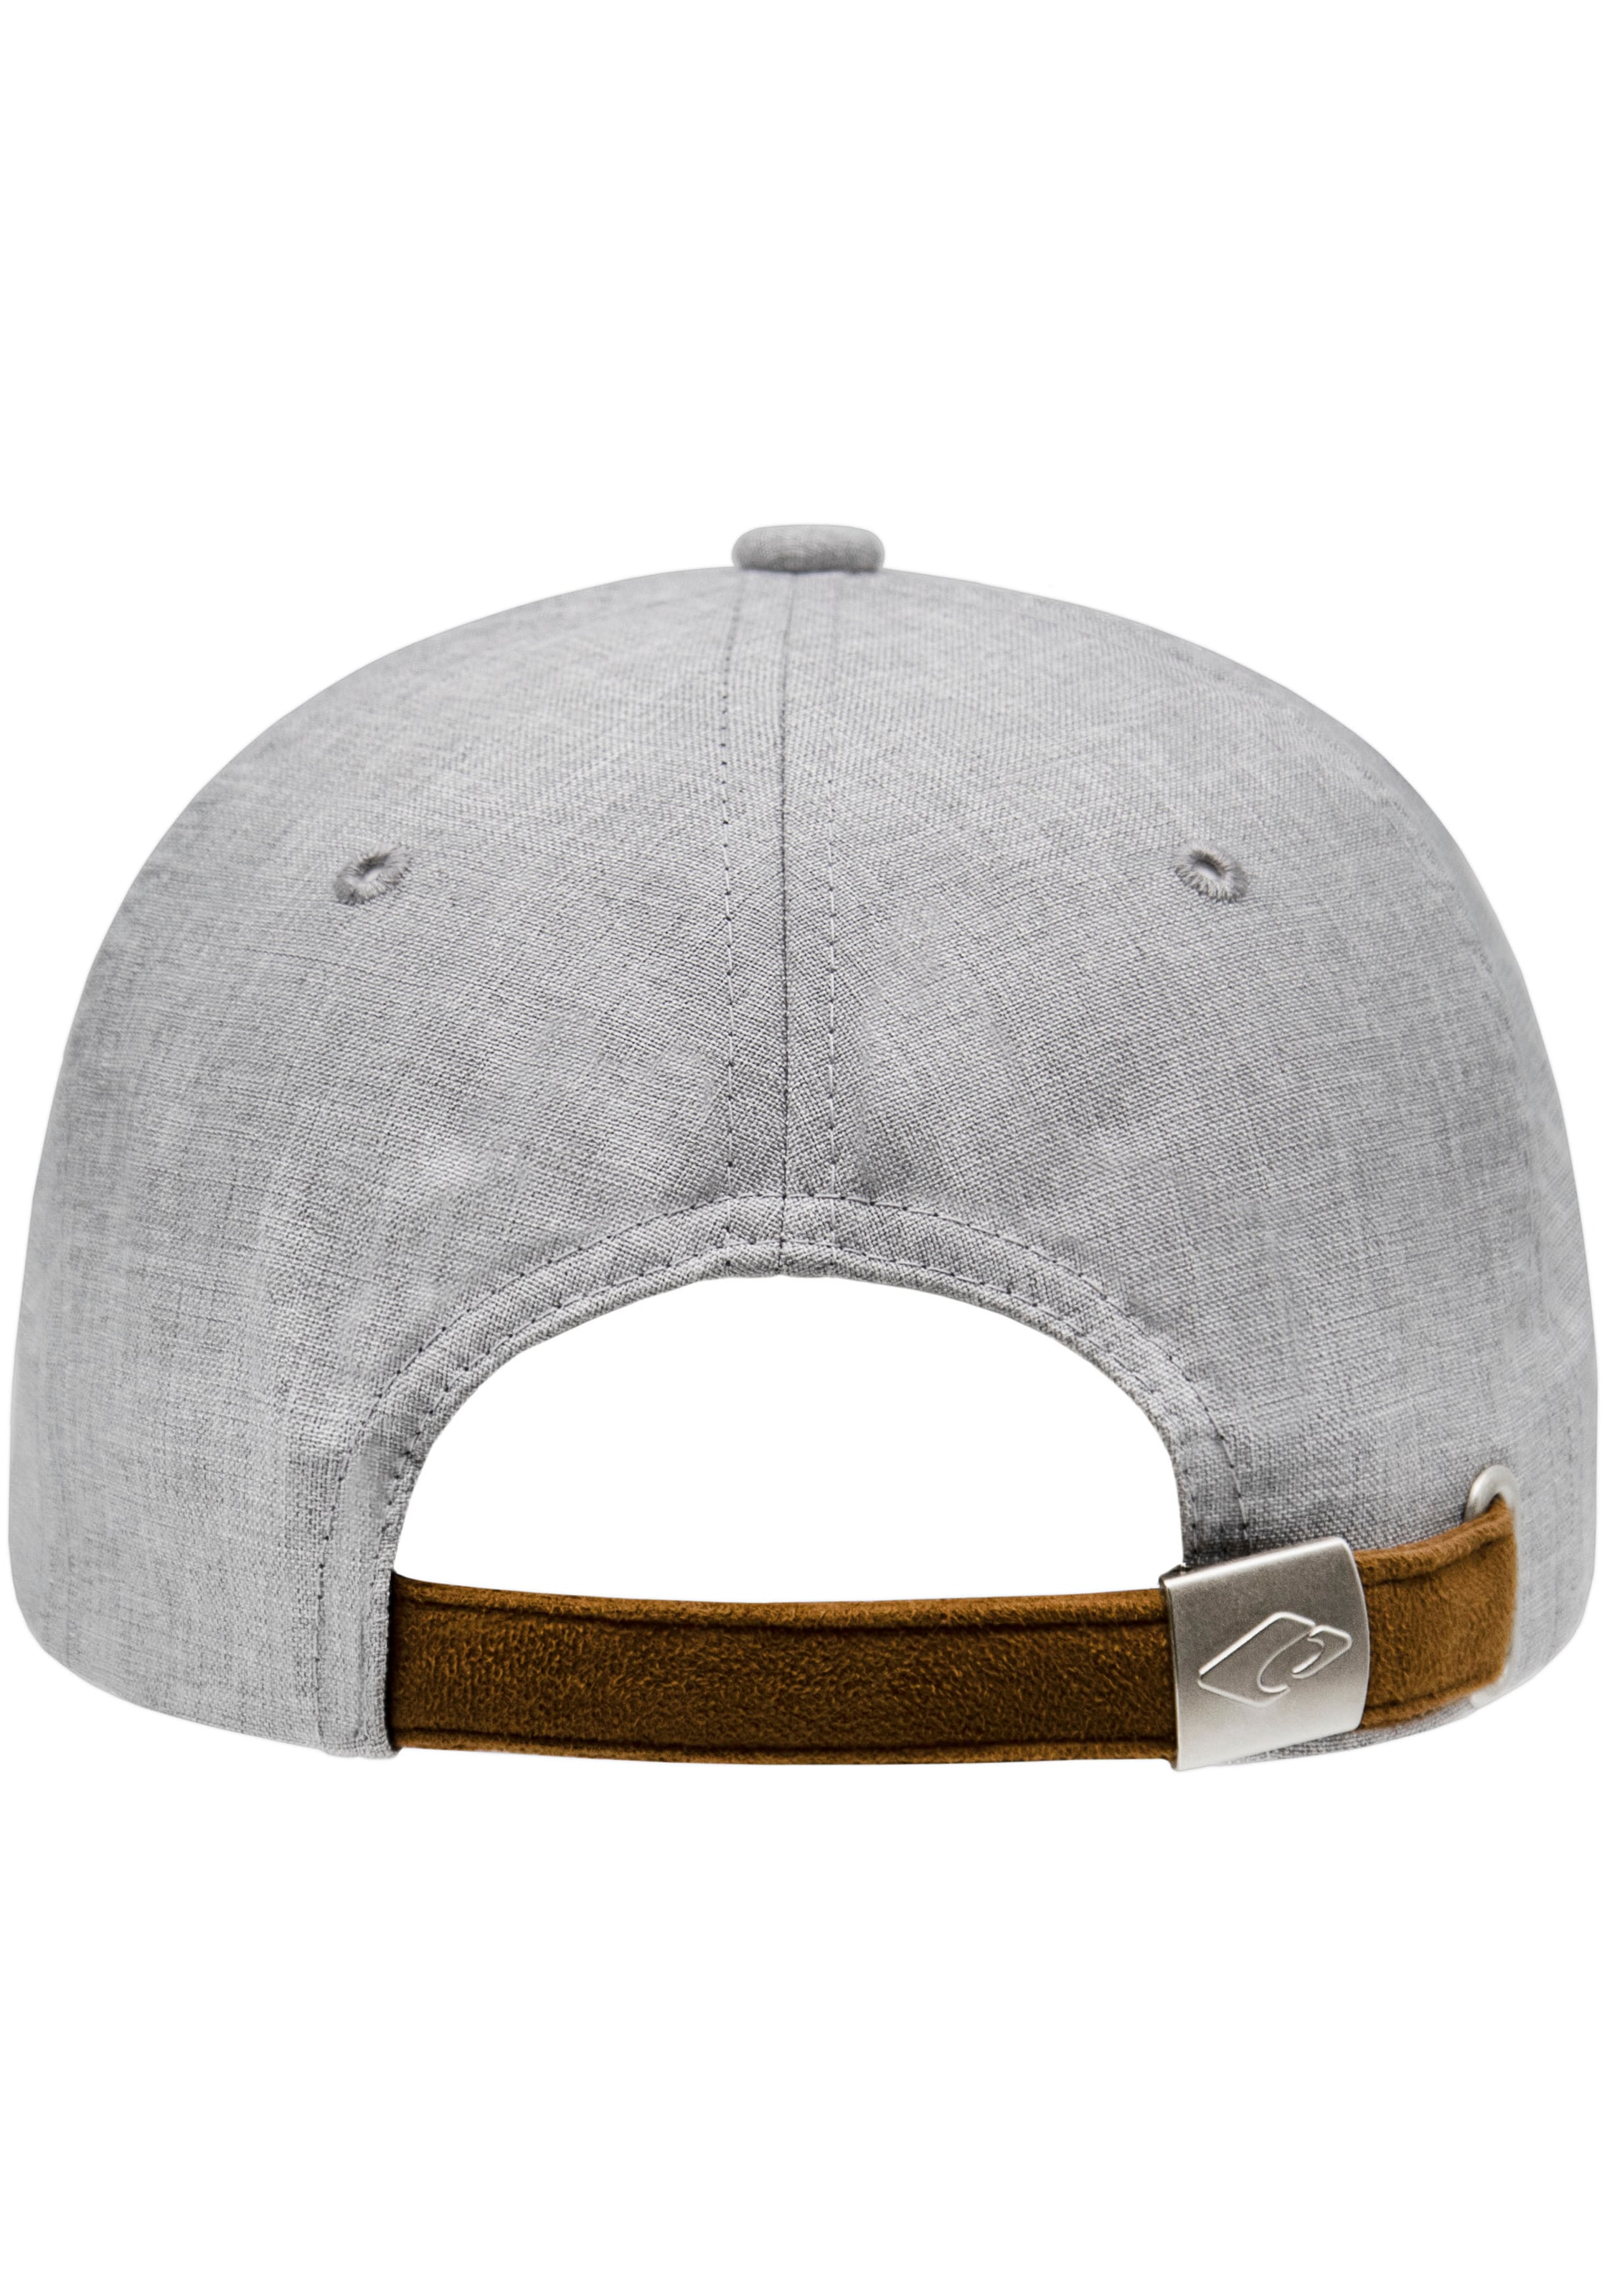 chillouts Baseball Cap, Amadora Hat in melierter Optik, One Size, verstellbar